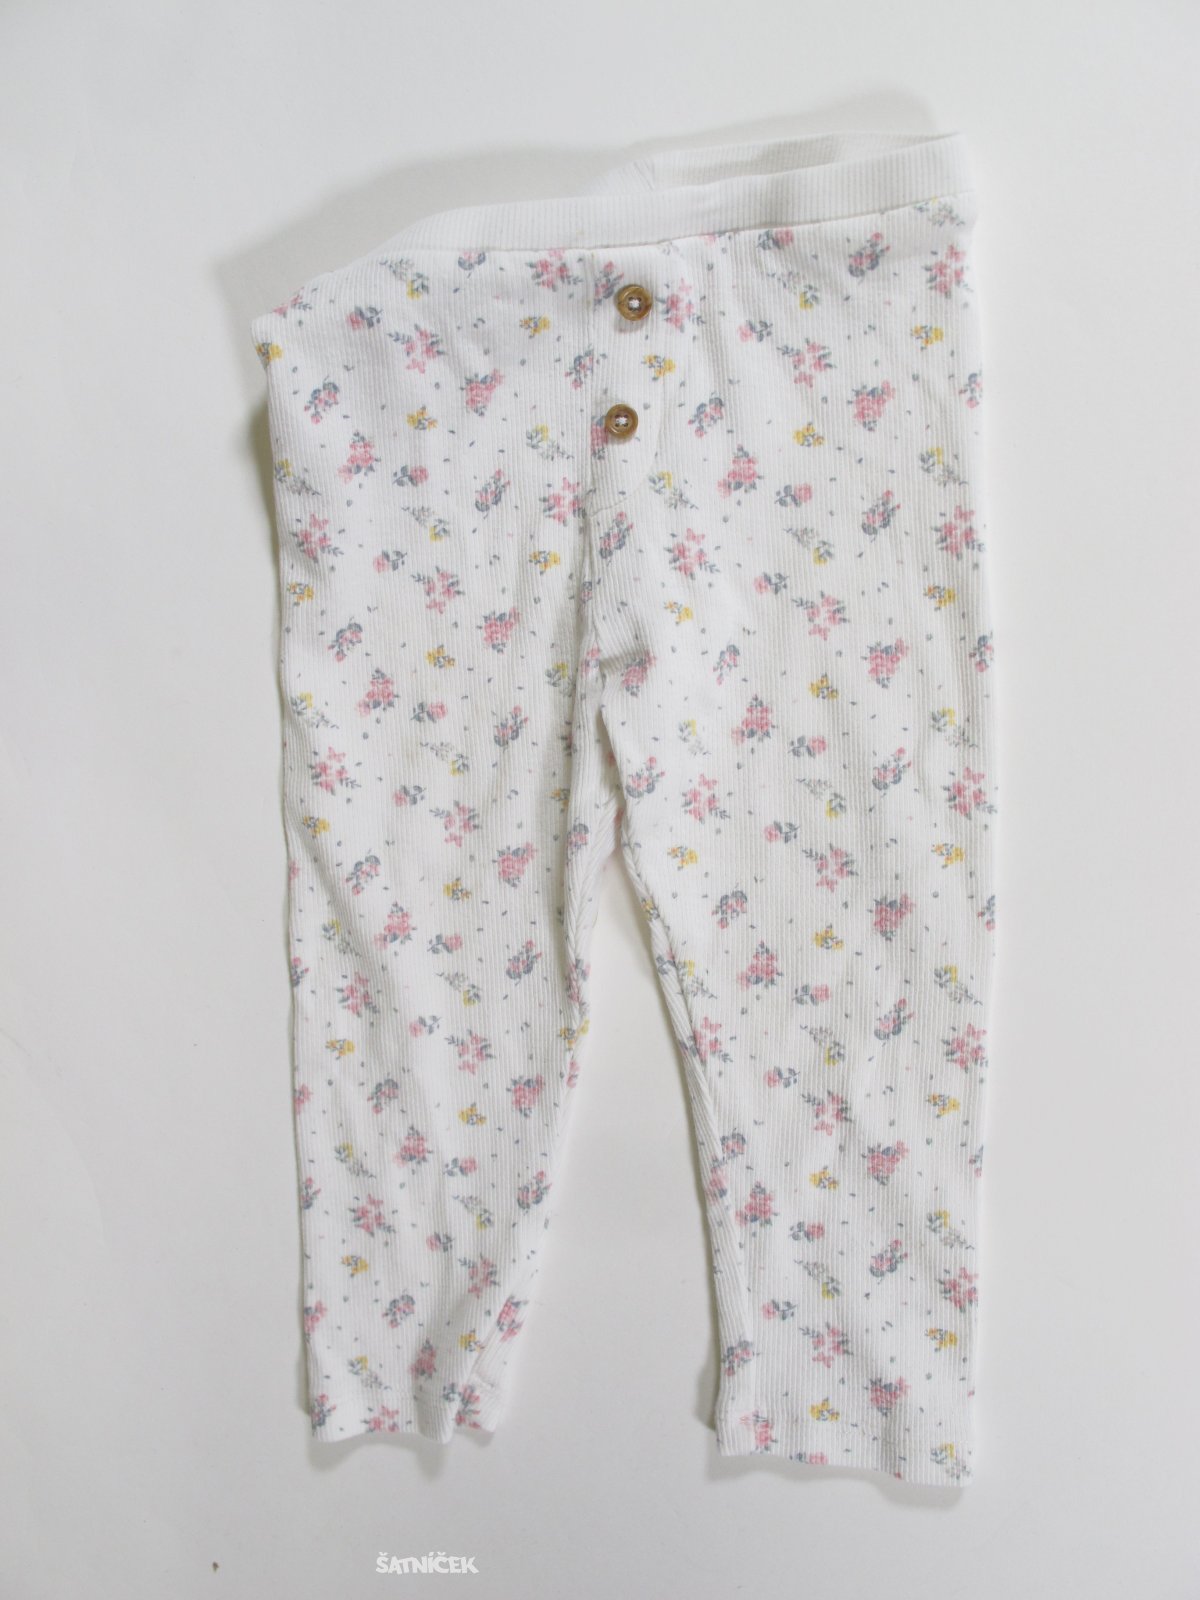 Pyžamové kalhoty s kytkami pro holyk secondhand